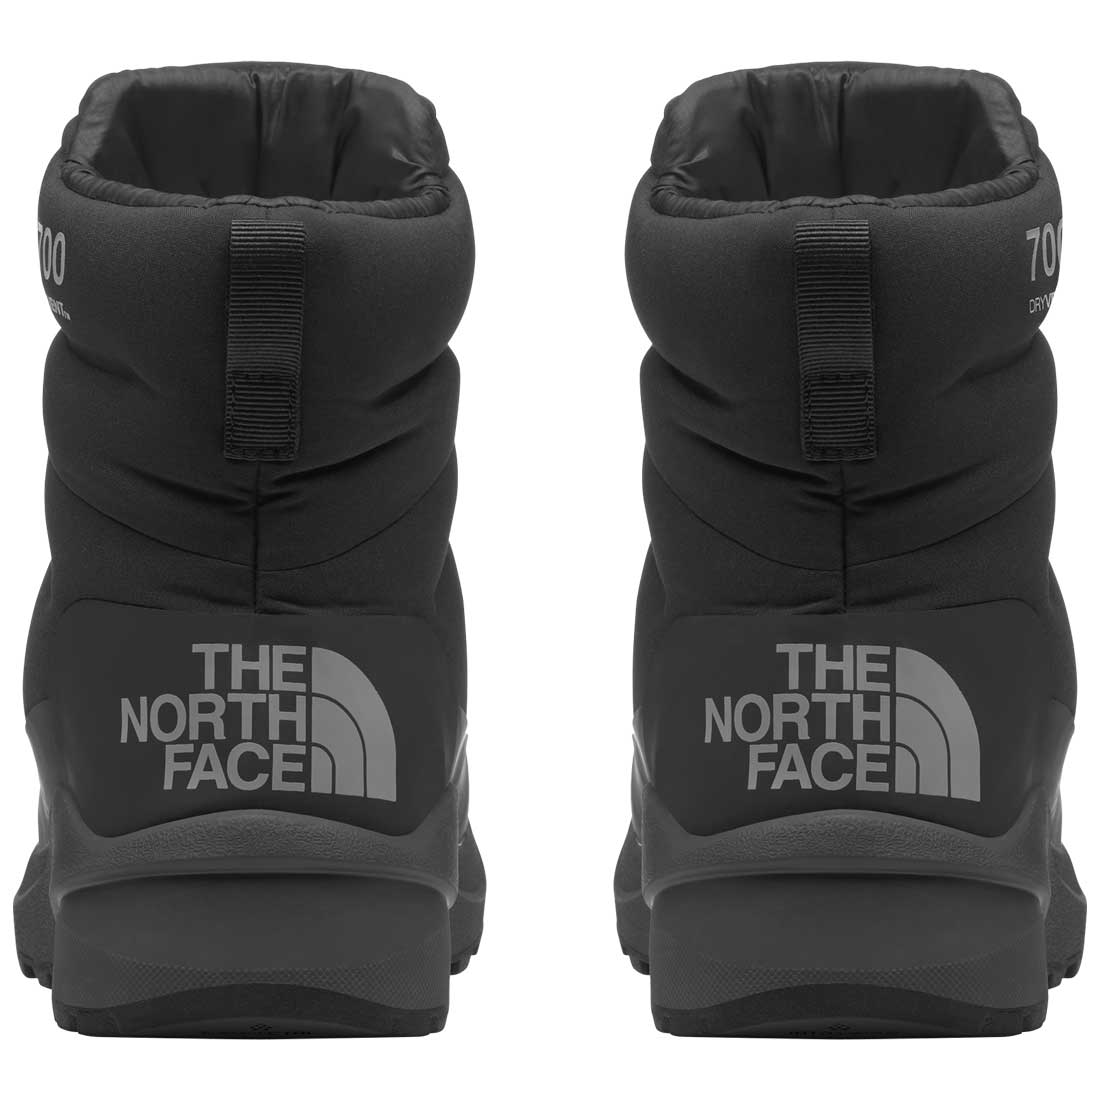 The North Face Nuptse II Bootie WP - Women's